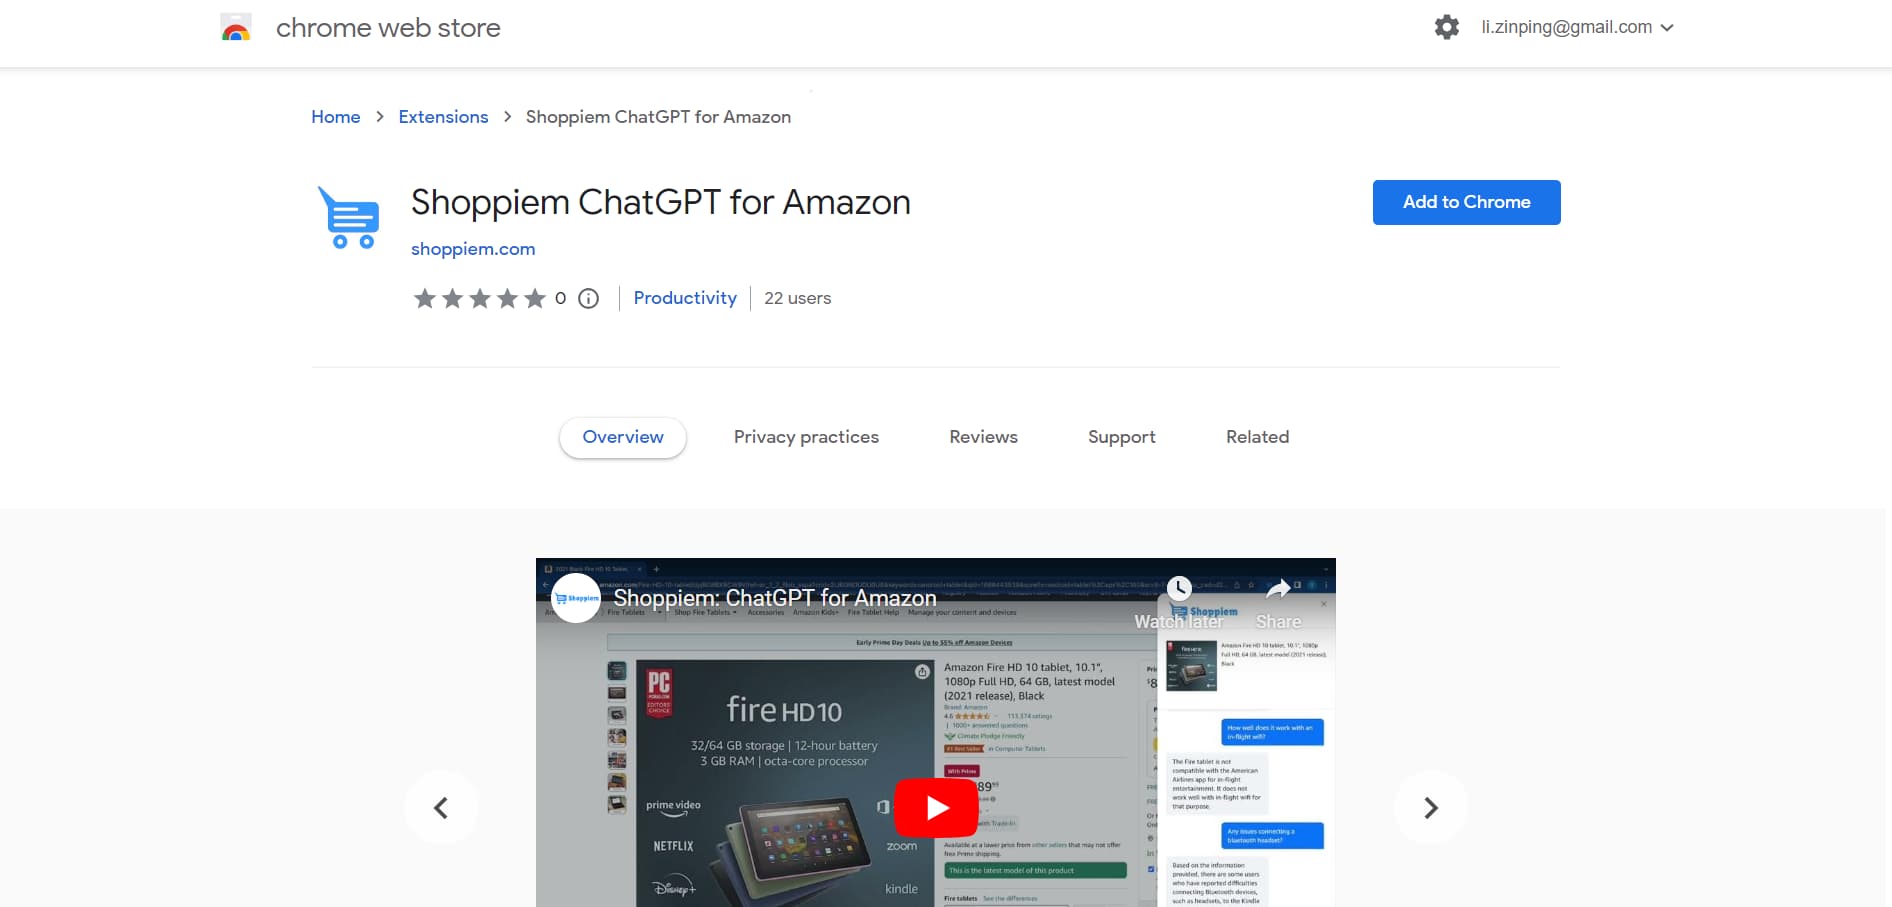 Shoppiem ChatGPT for Amazon
